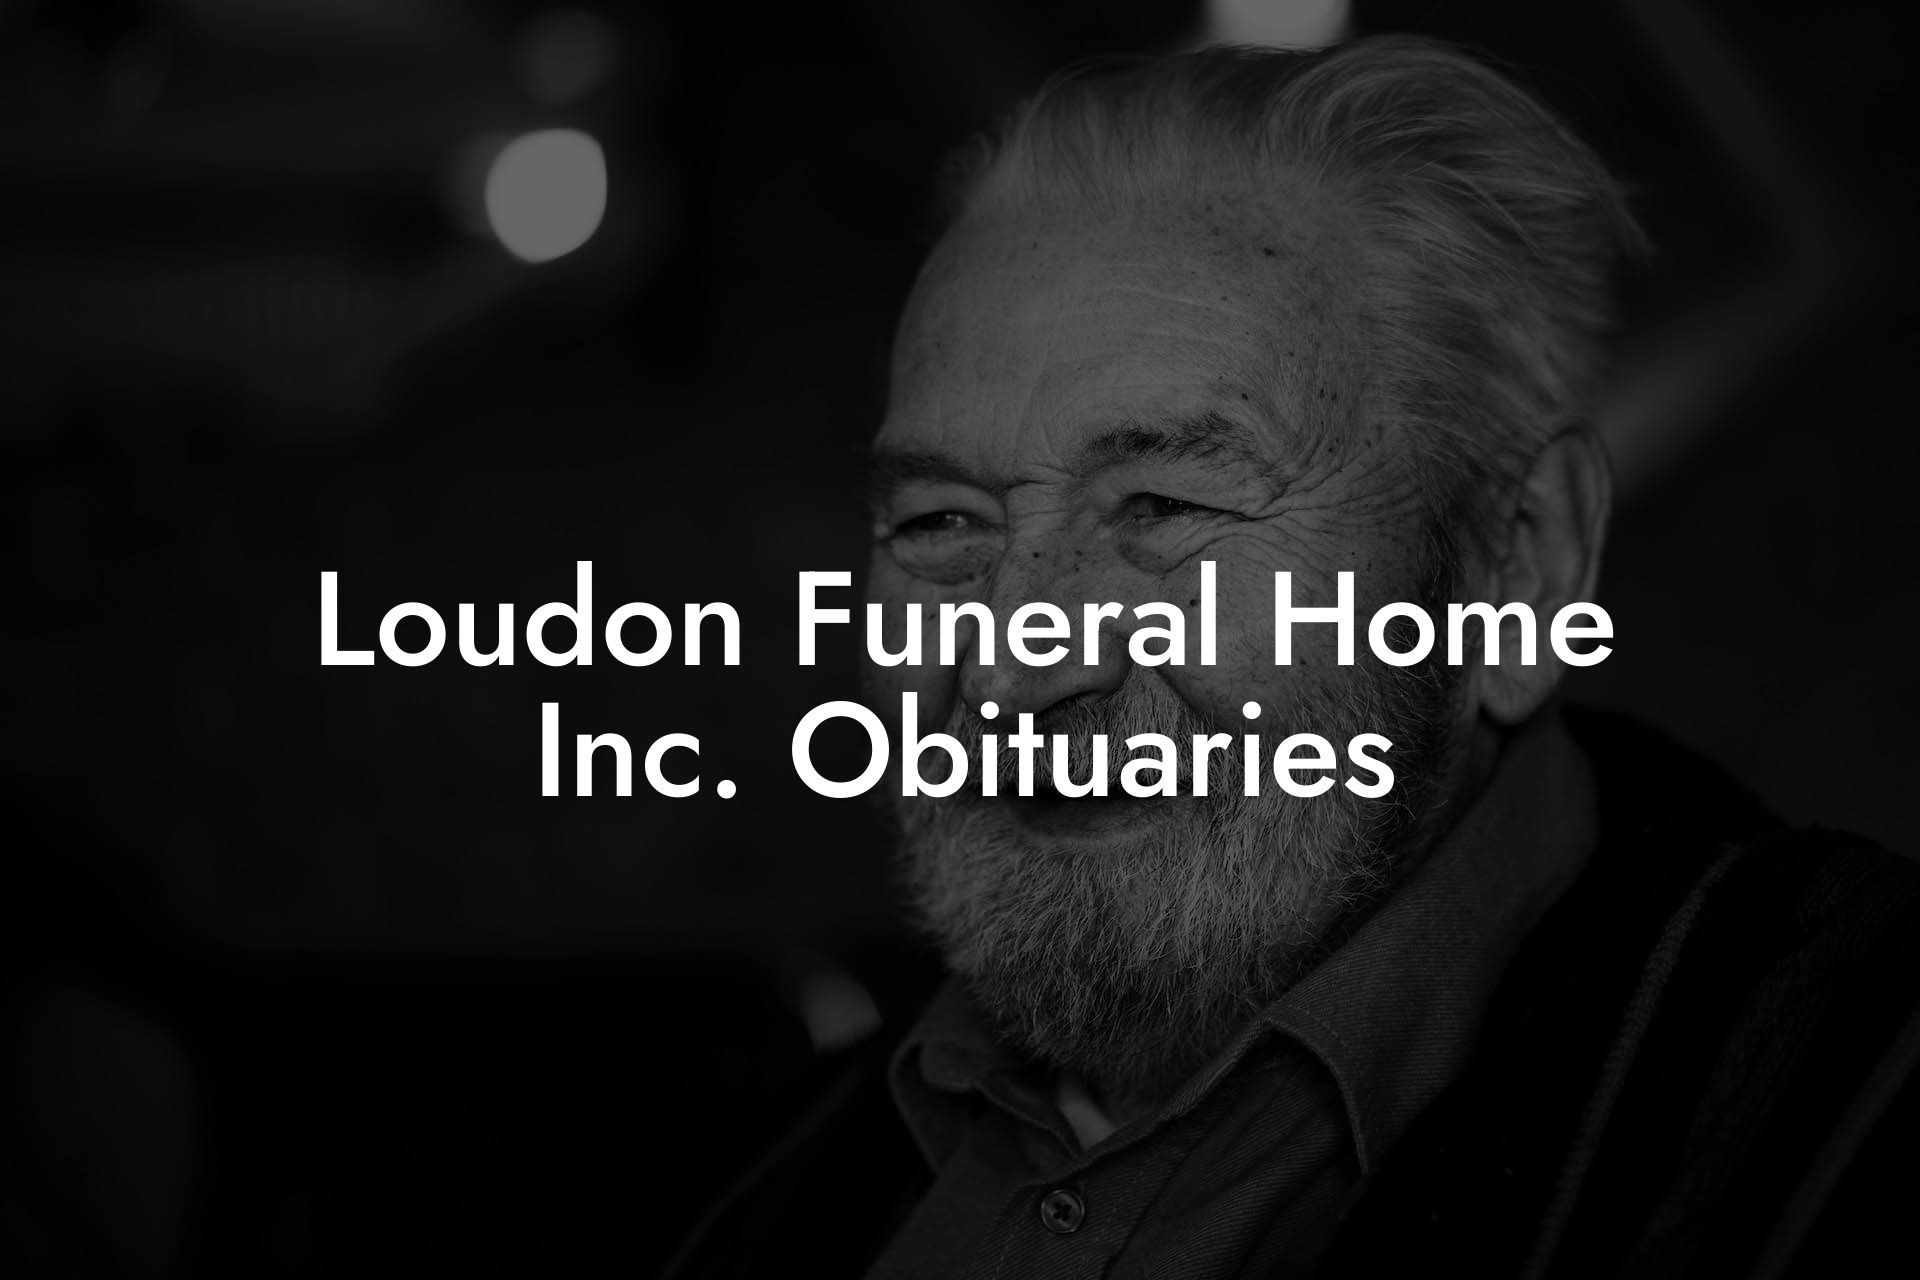 Loudon Funeral Home Inc. Obituaries